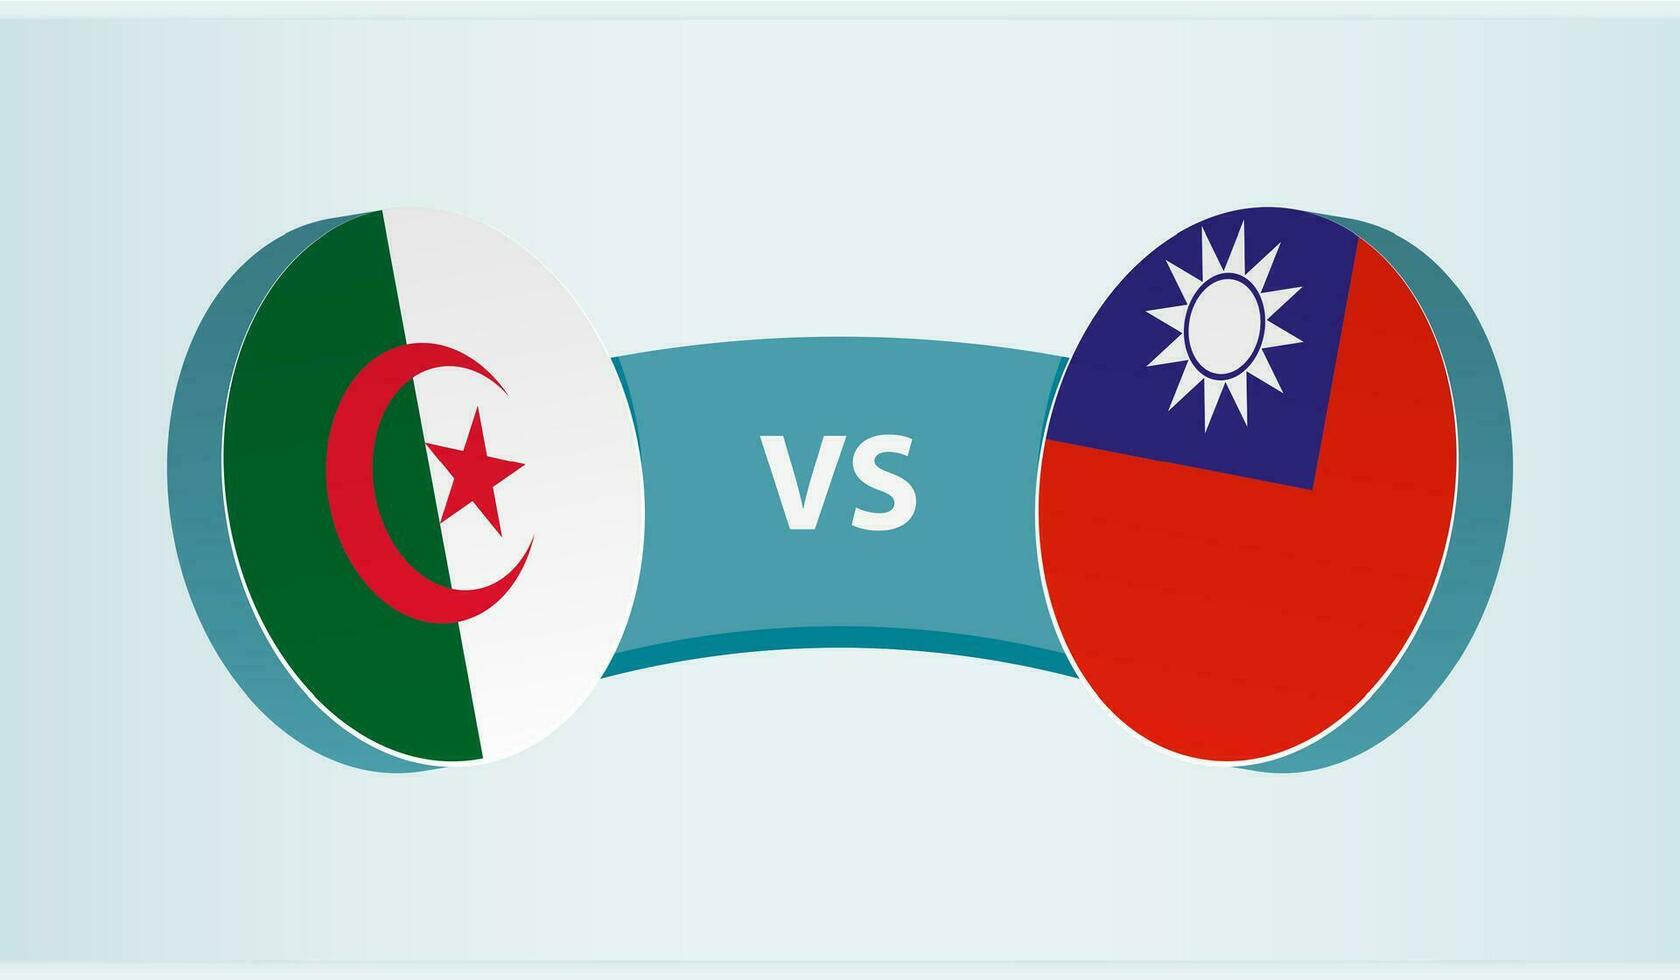 algeriet mot taiwan, team sporter konkurrens begrepp. vektor